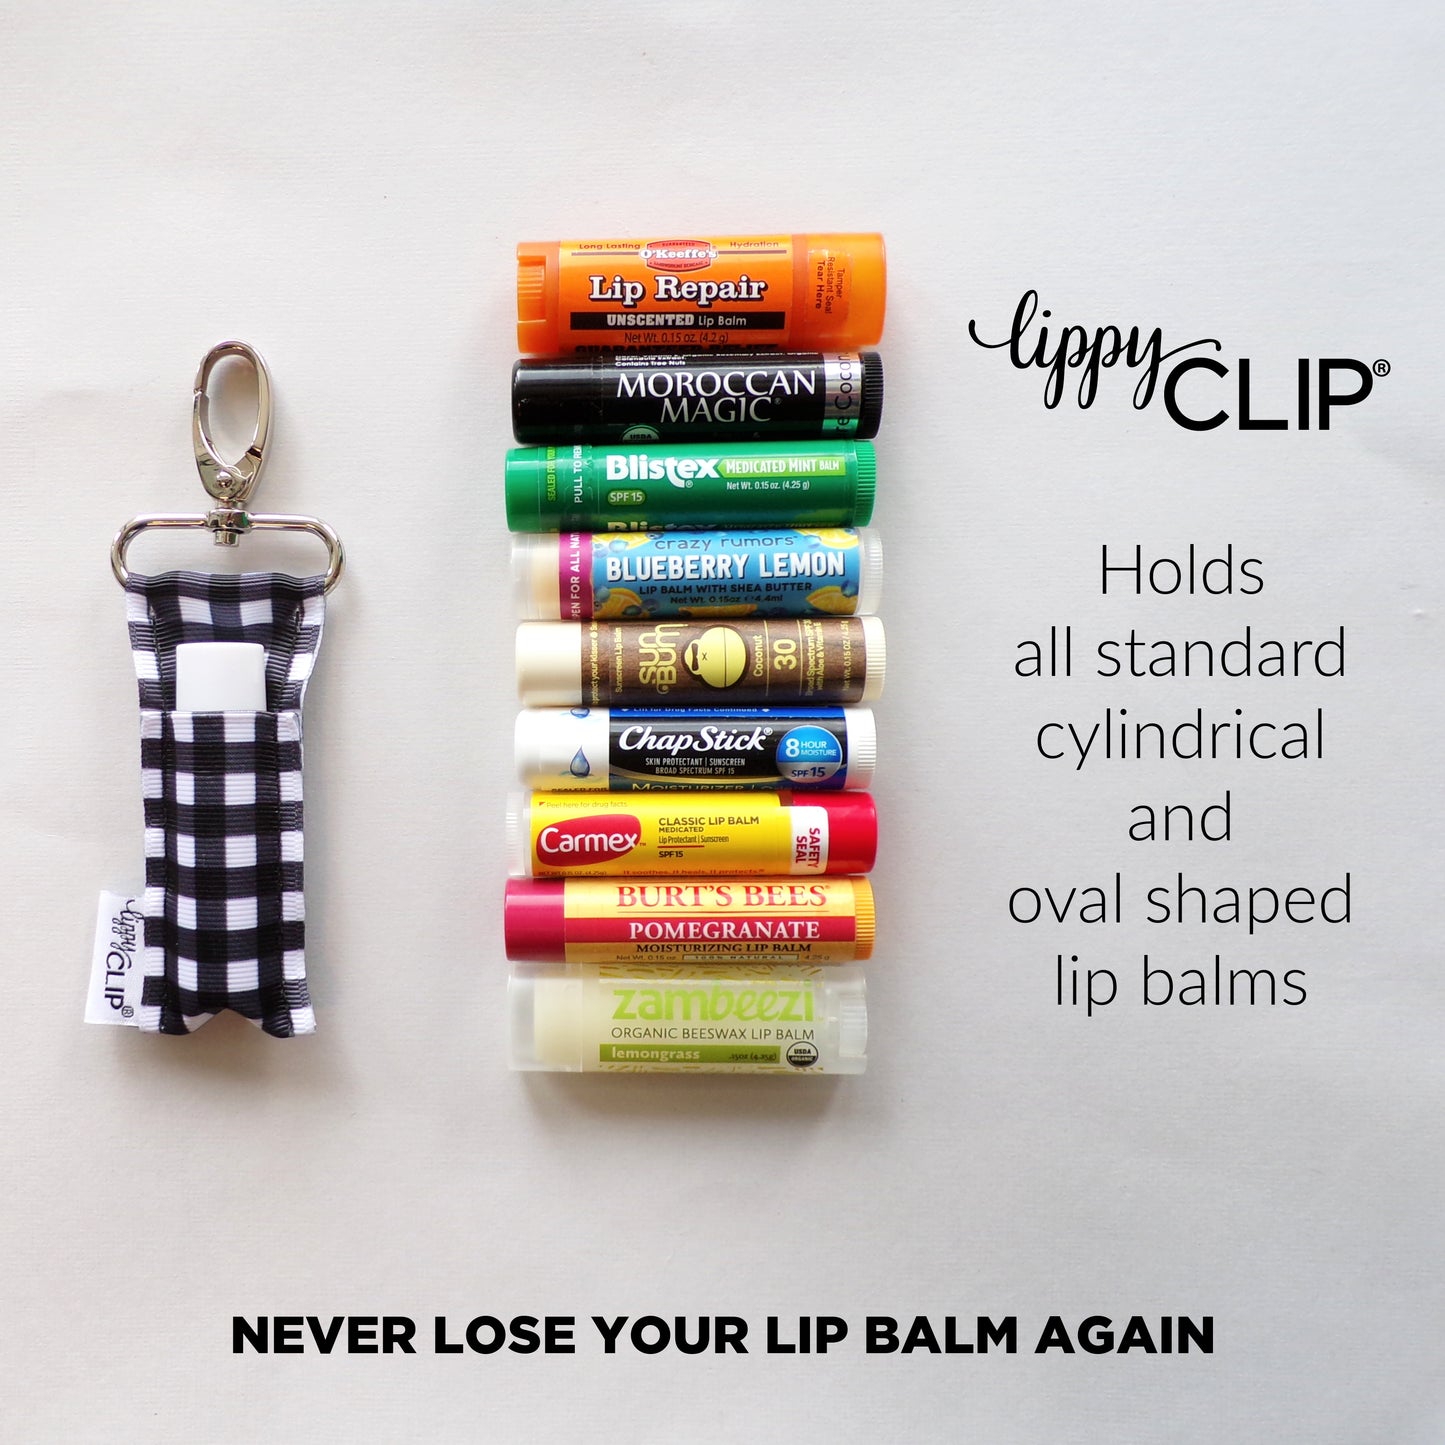 Tennis Match LippyClip® Lip Balm Holder